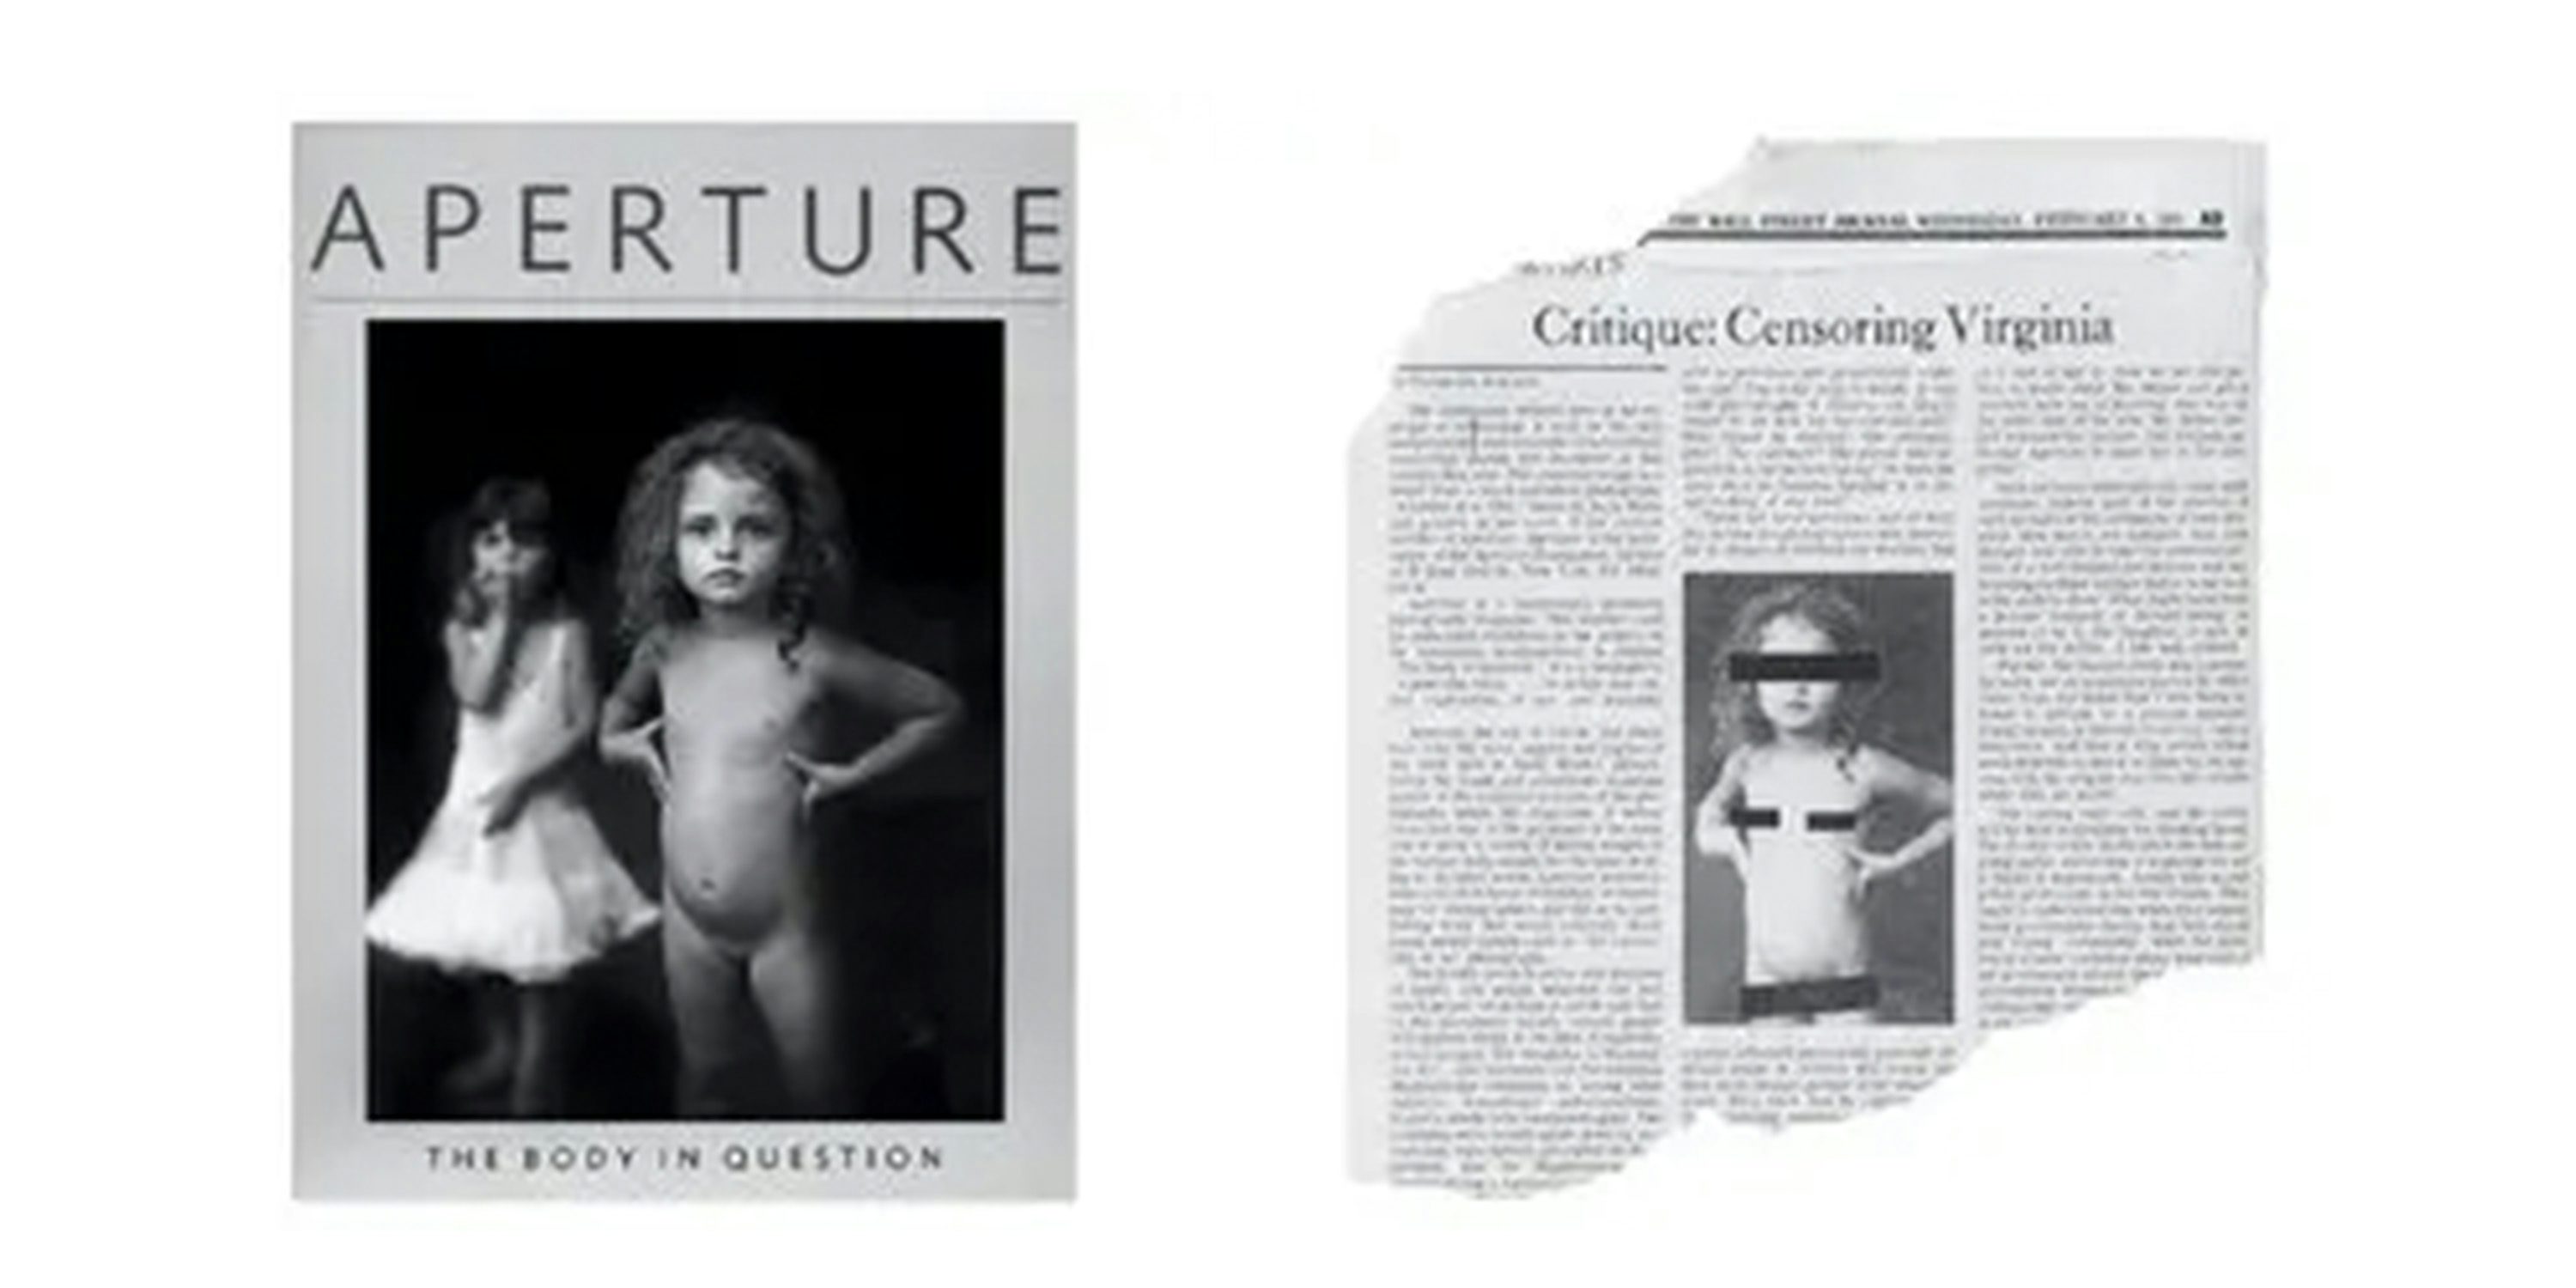 Sally Mann, cover of Aperture, 1990. WSJ “Critique: Censoring Virginia,” 1991